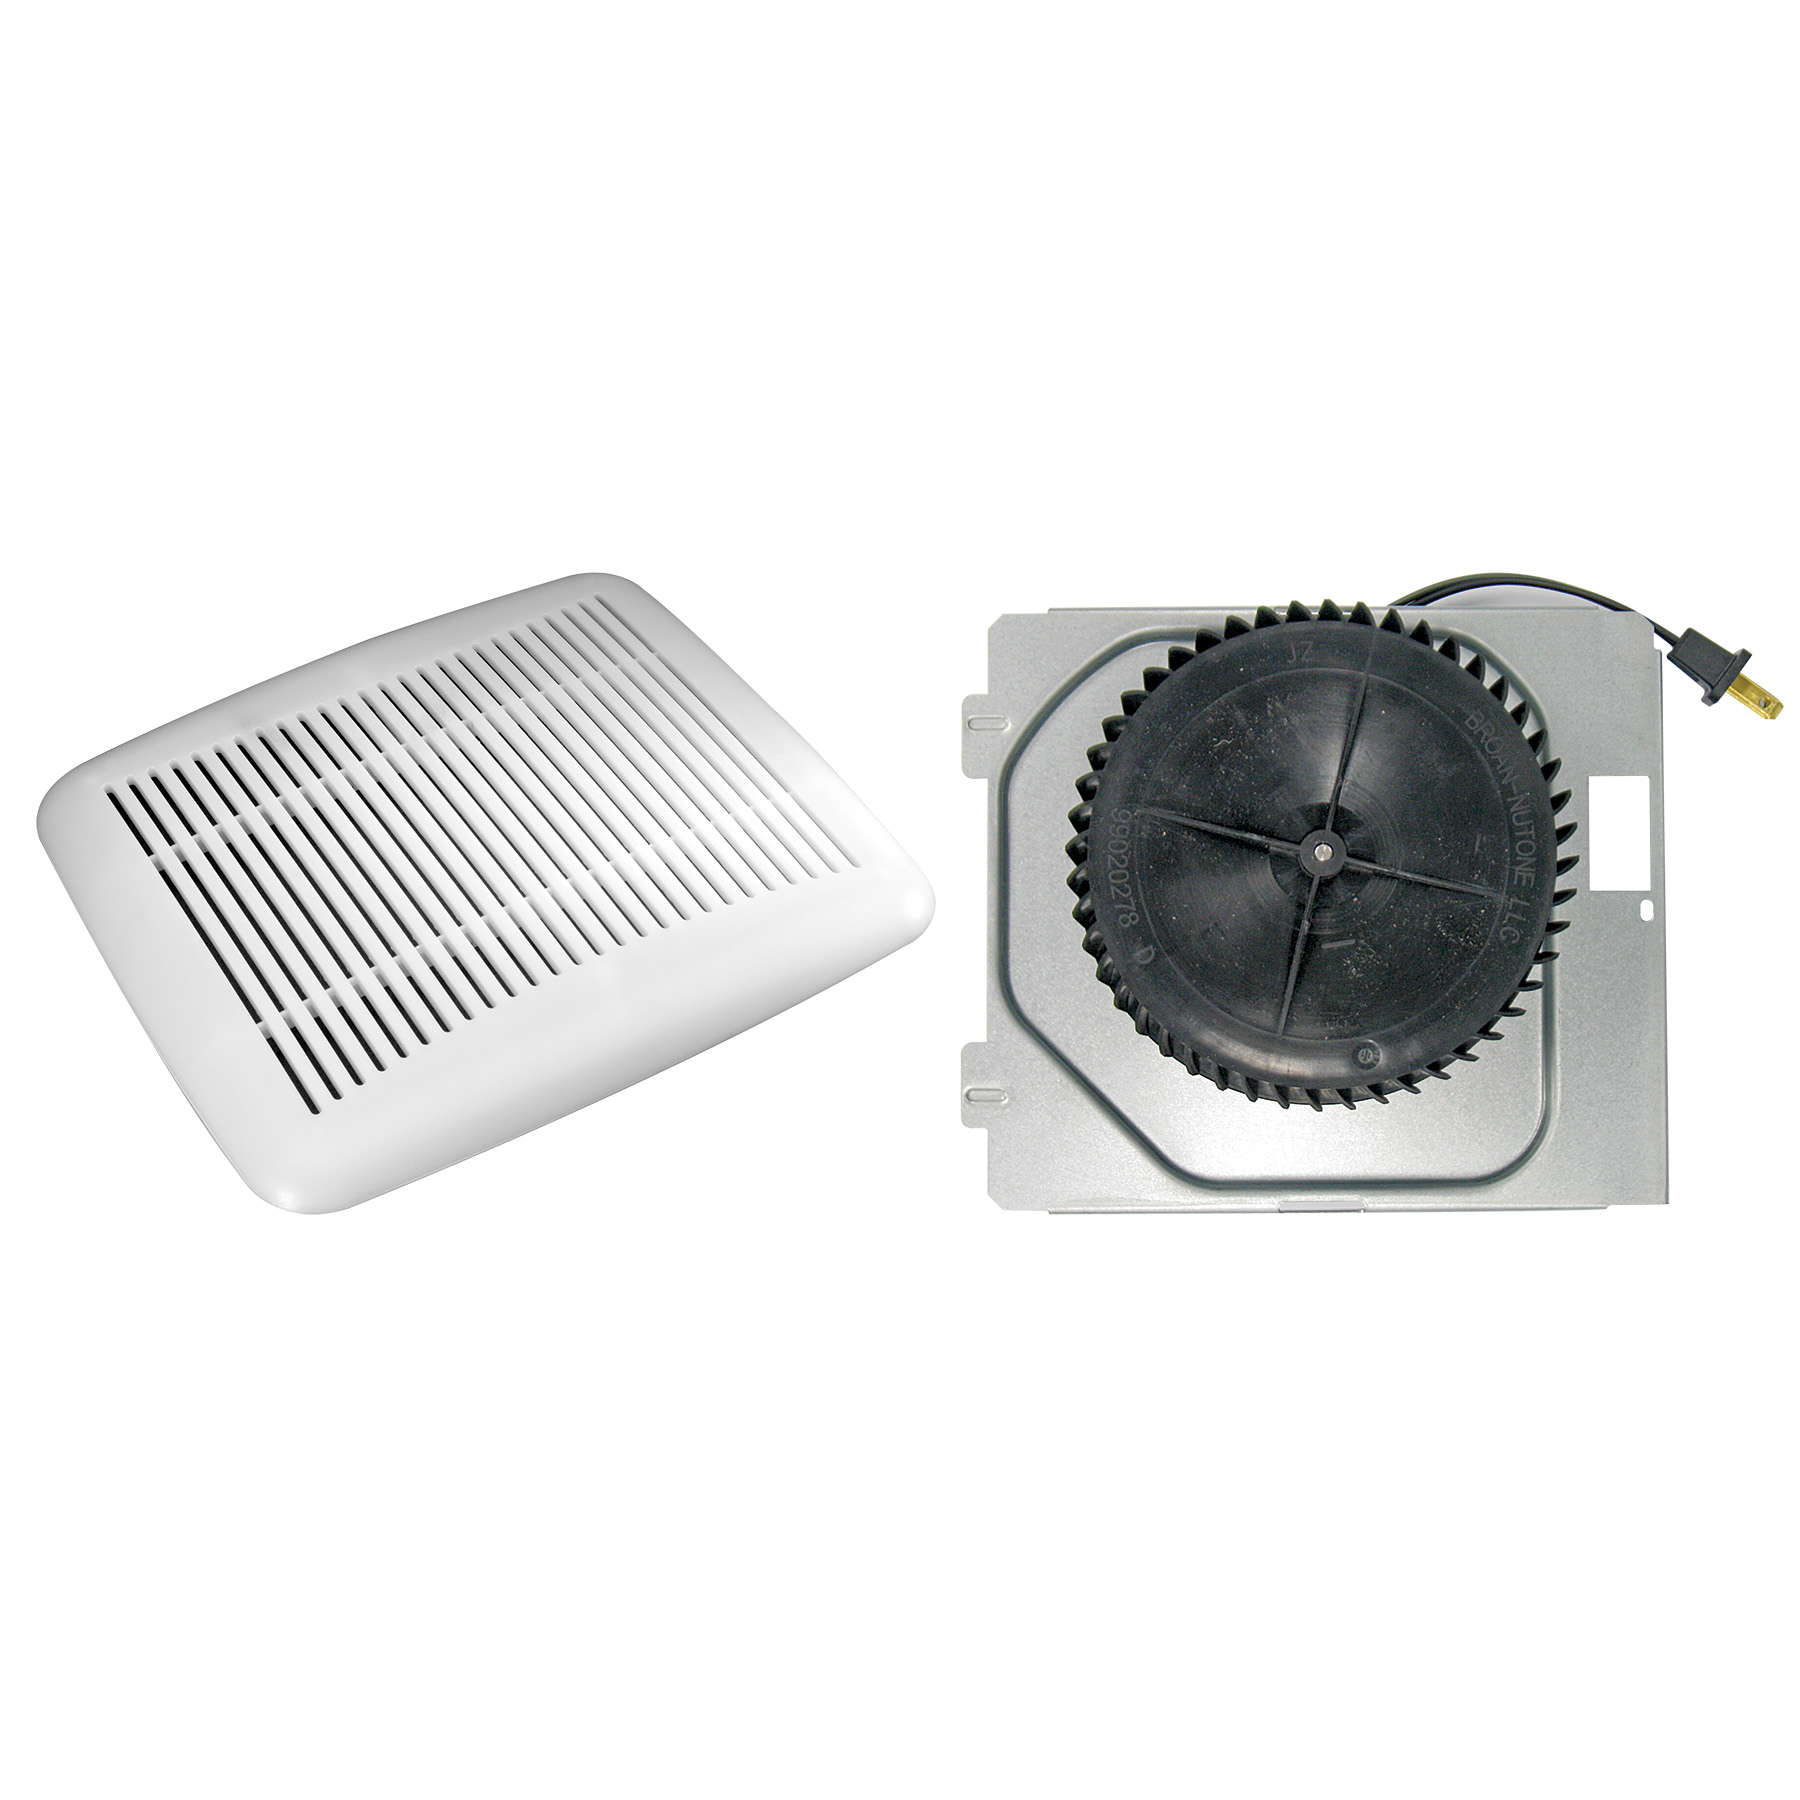 **DISCONTINUED** NuTone®60 CFM Bath Fan Upgrade Kit, 3.0 Sones